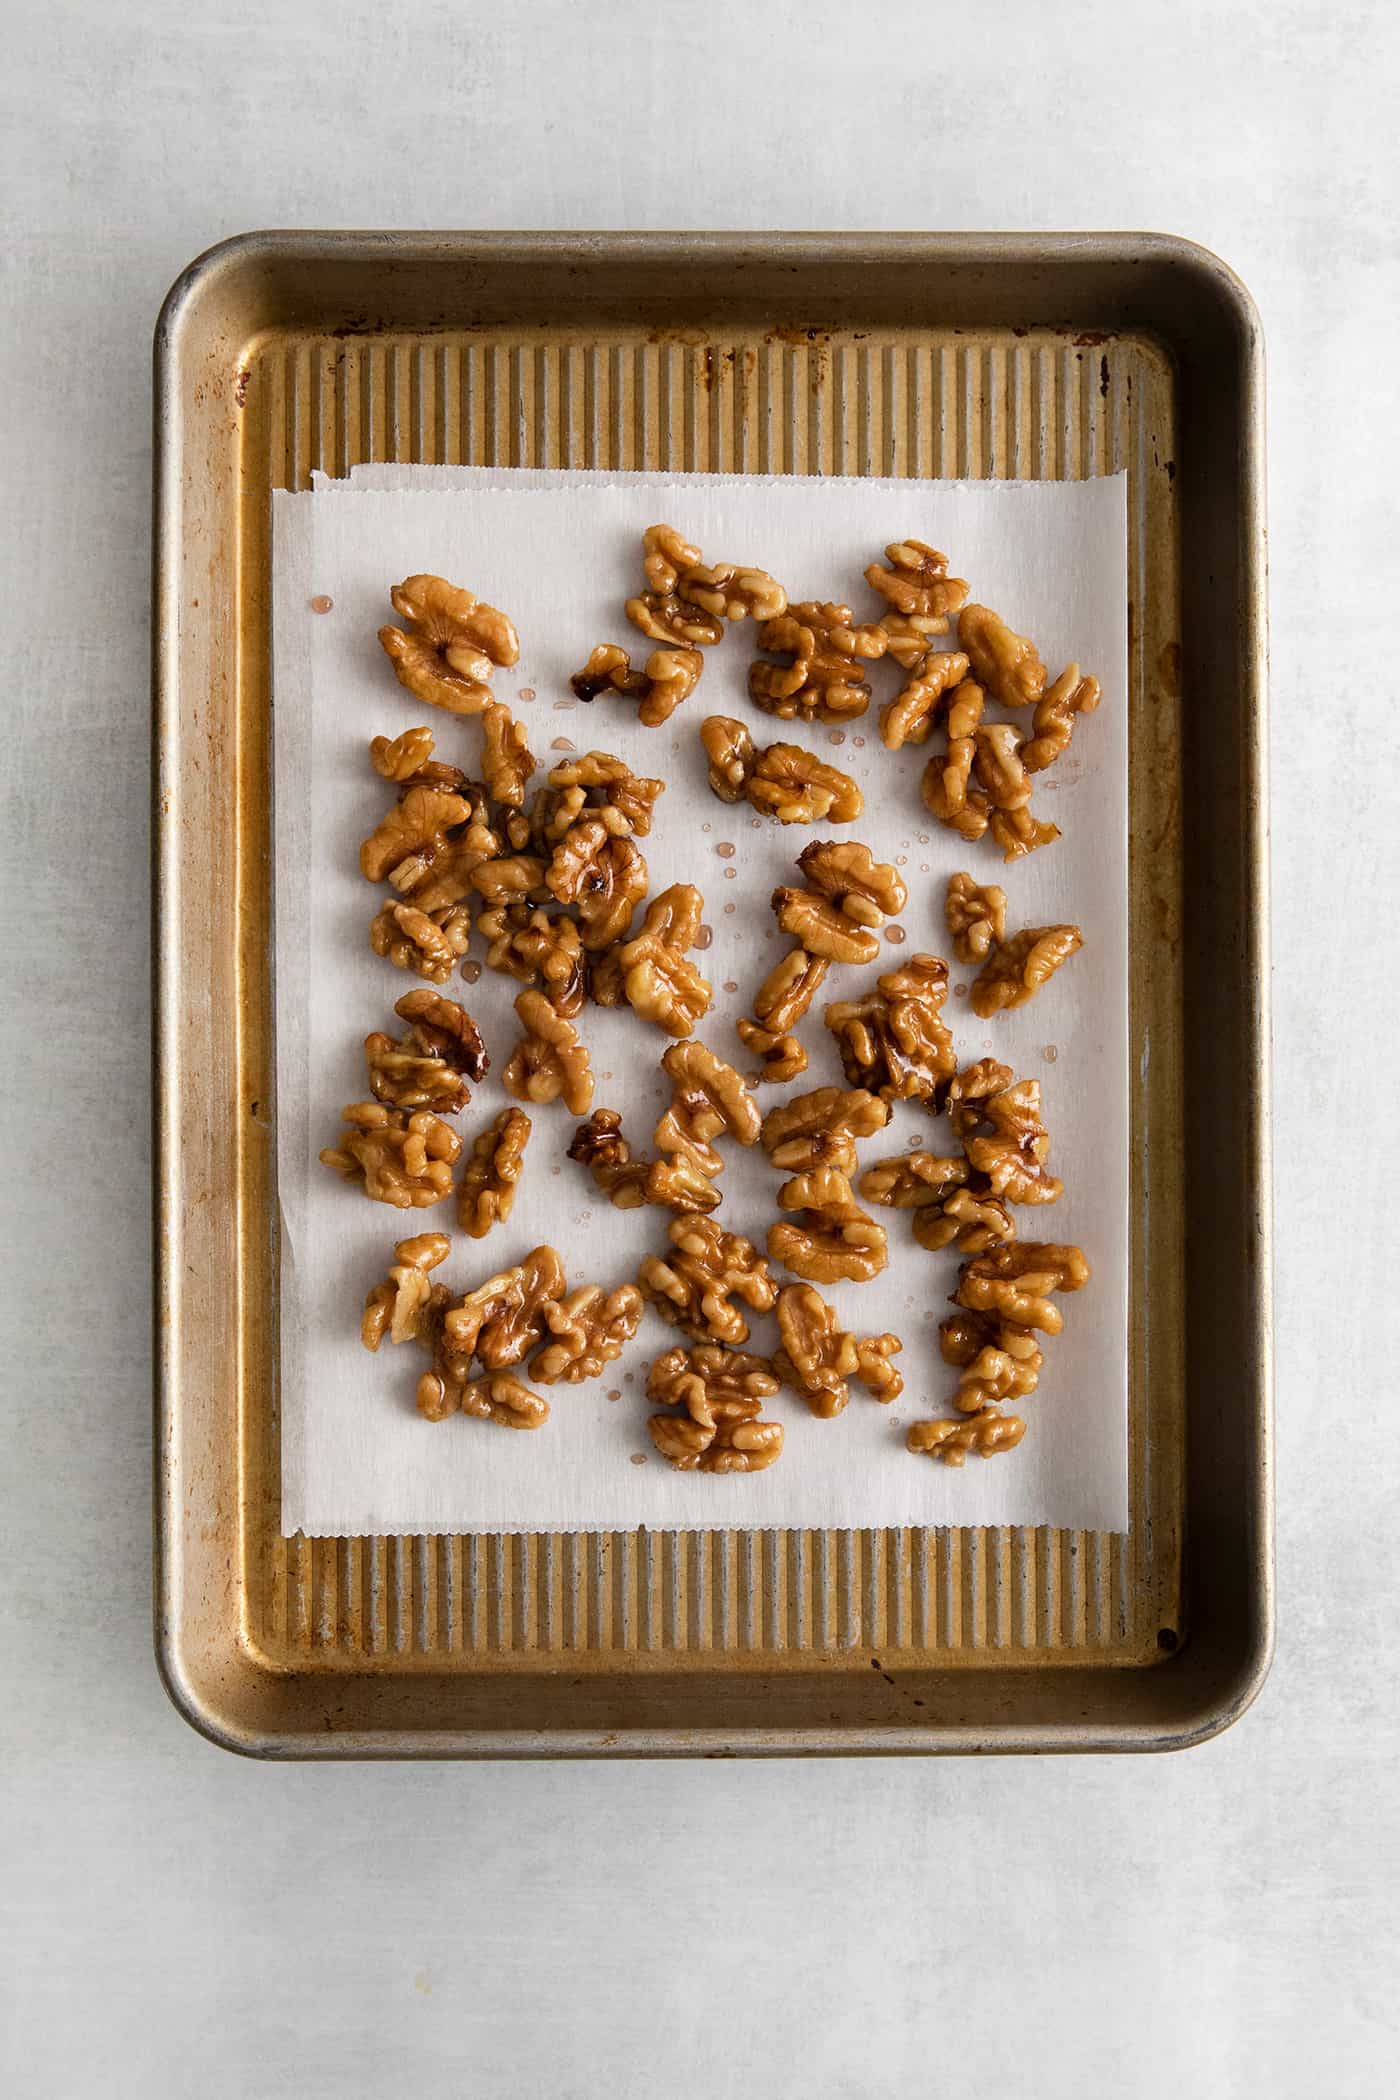 Honey walnuts on a baking sheet